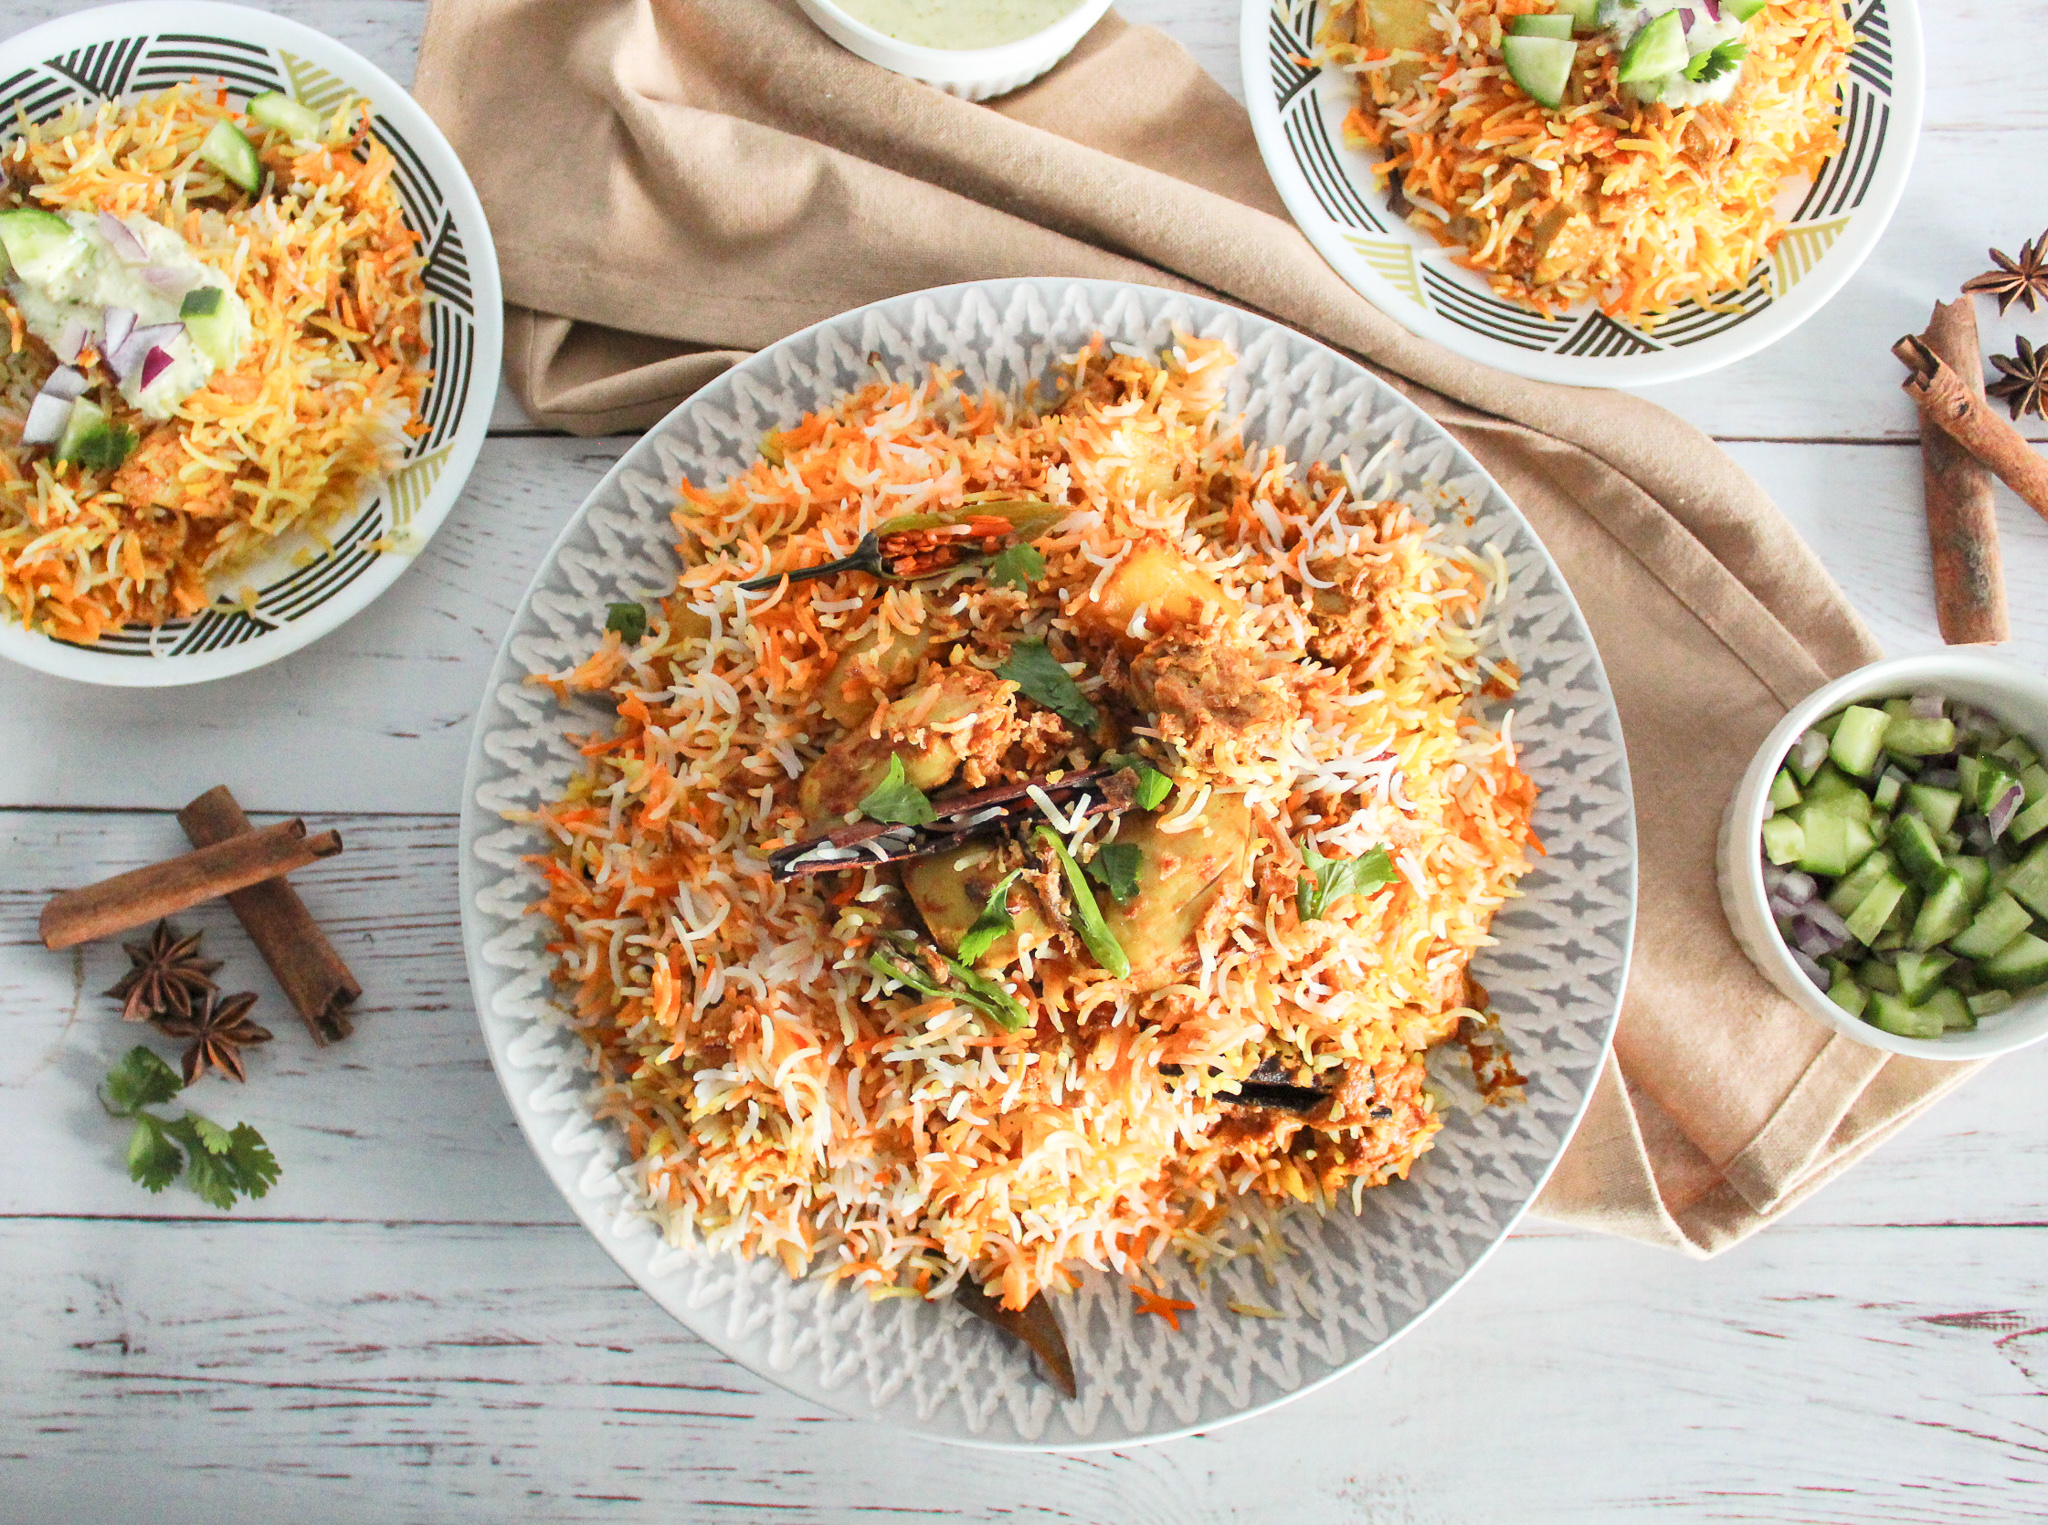 Pakistani Chicken Biryani Recipe The Spice Mess